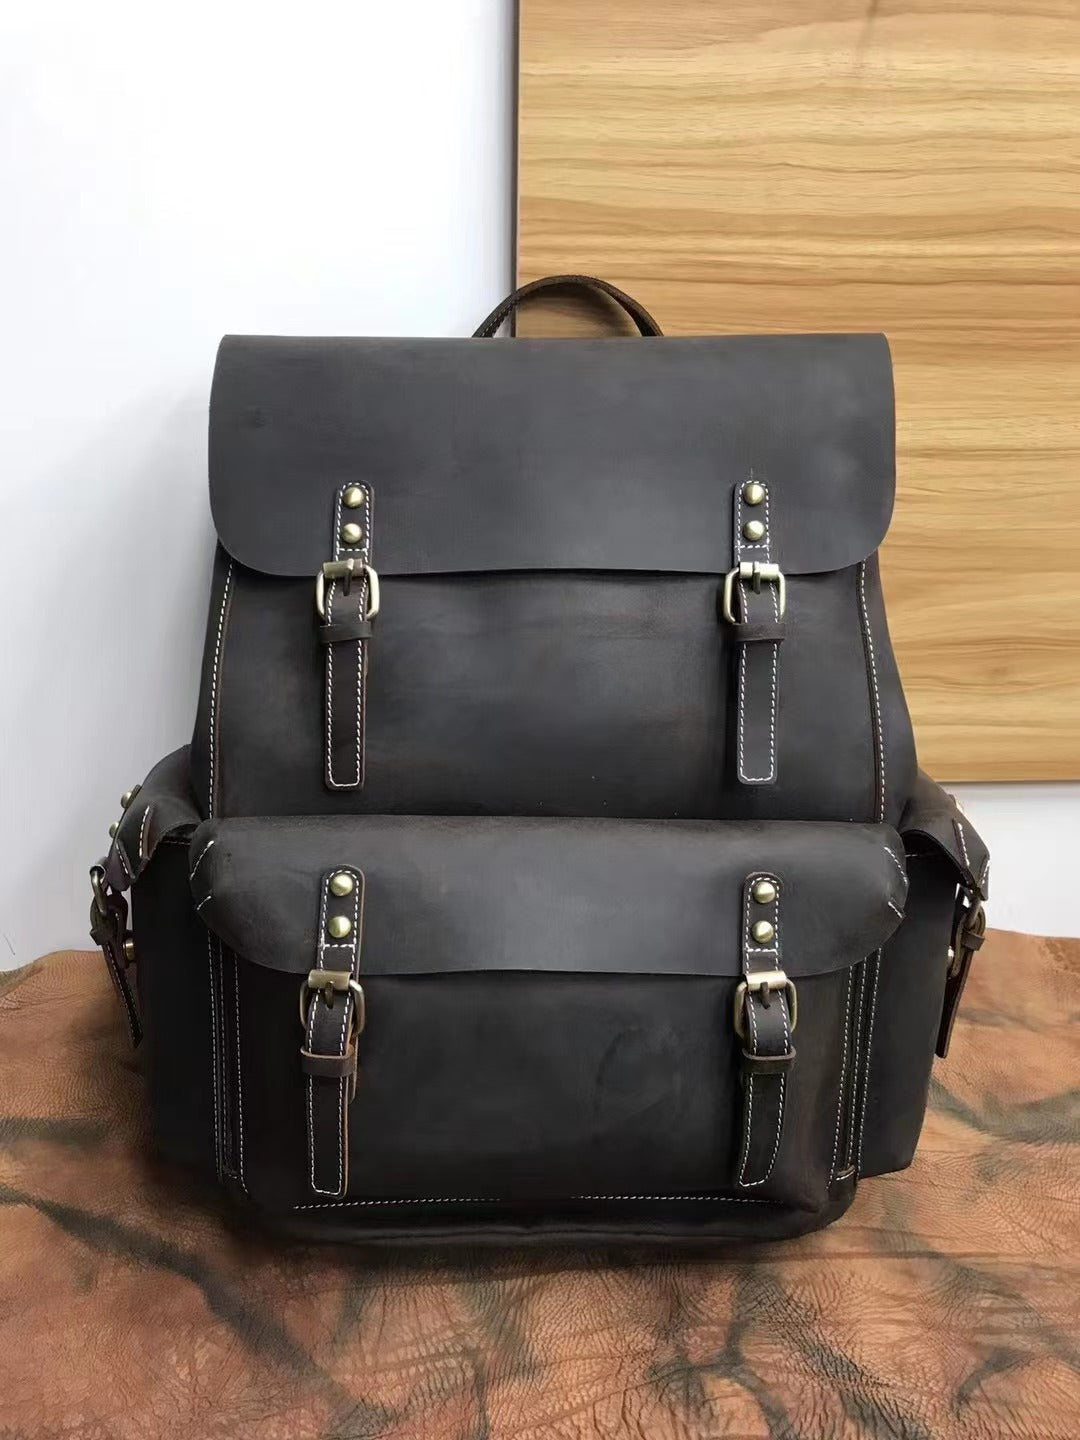 Large Capacity Retro Style Leather Backpack for Men's Travel Woyaza